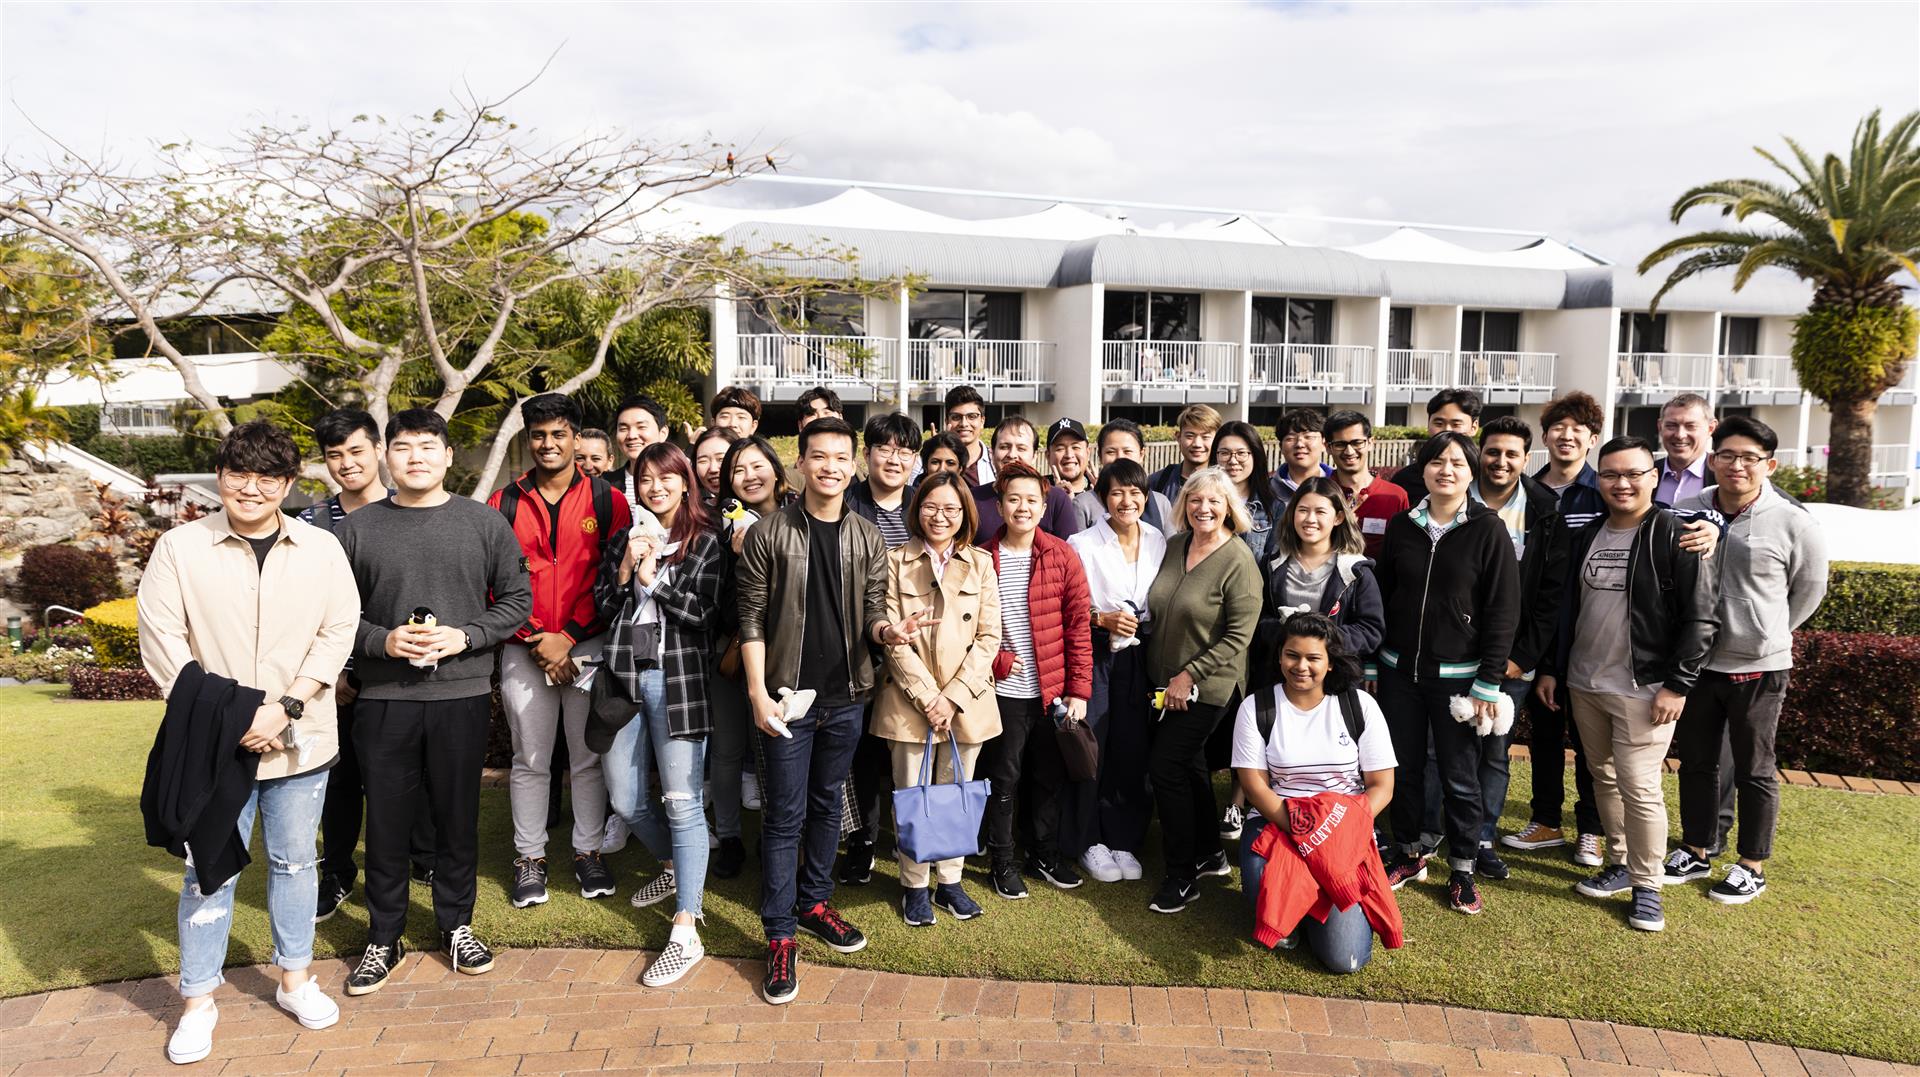 New Brisbane Institute whisks up first student cohort